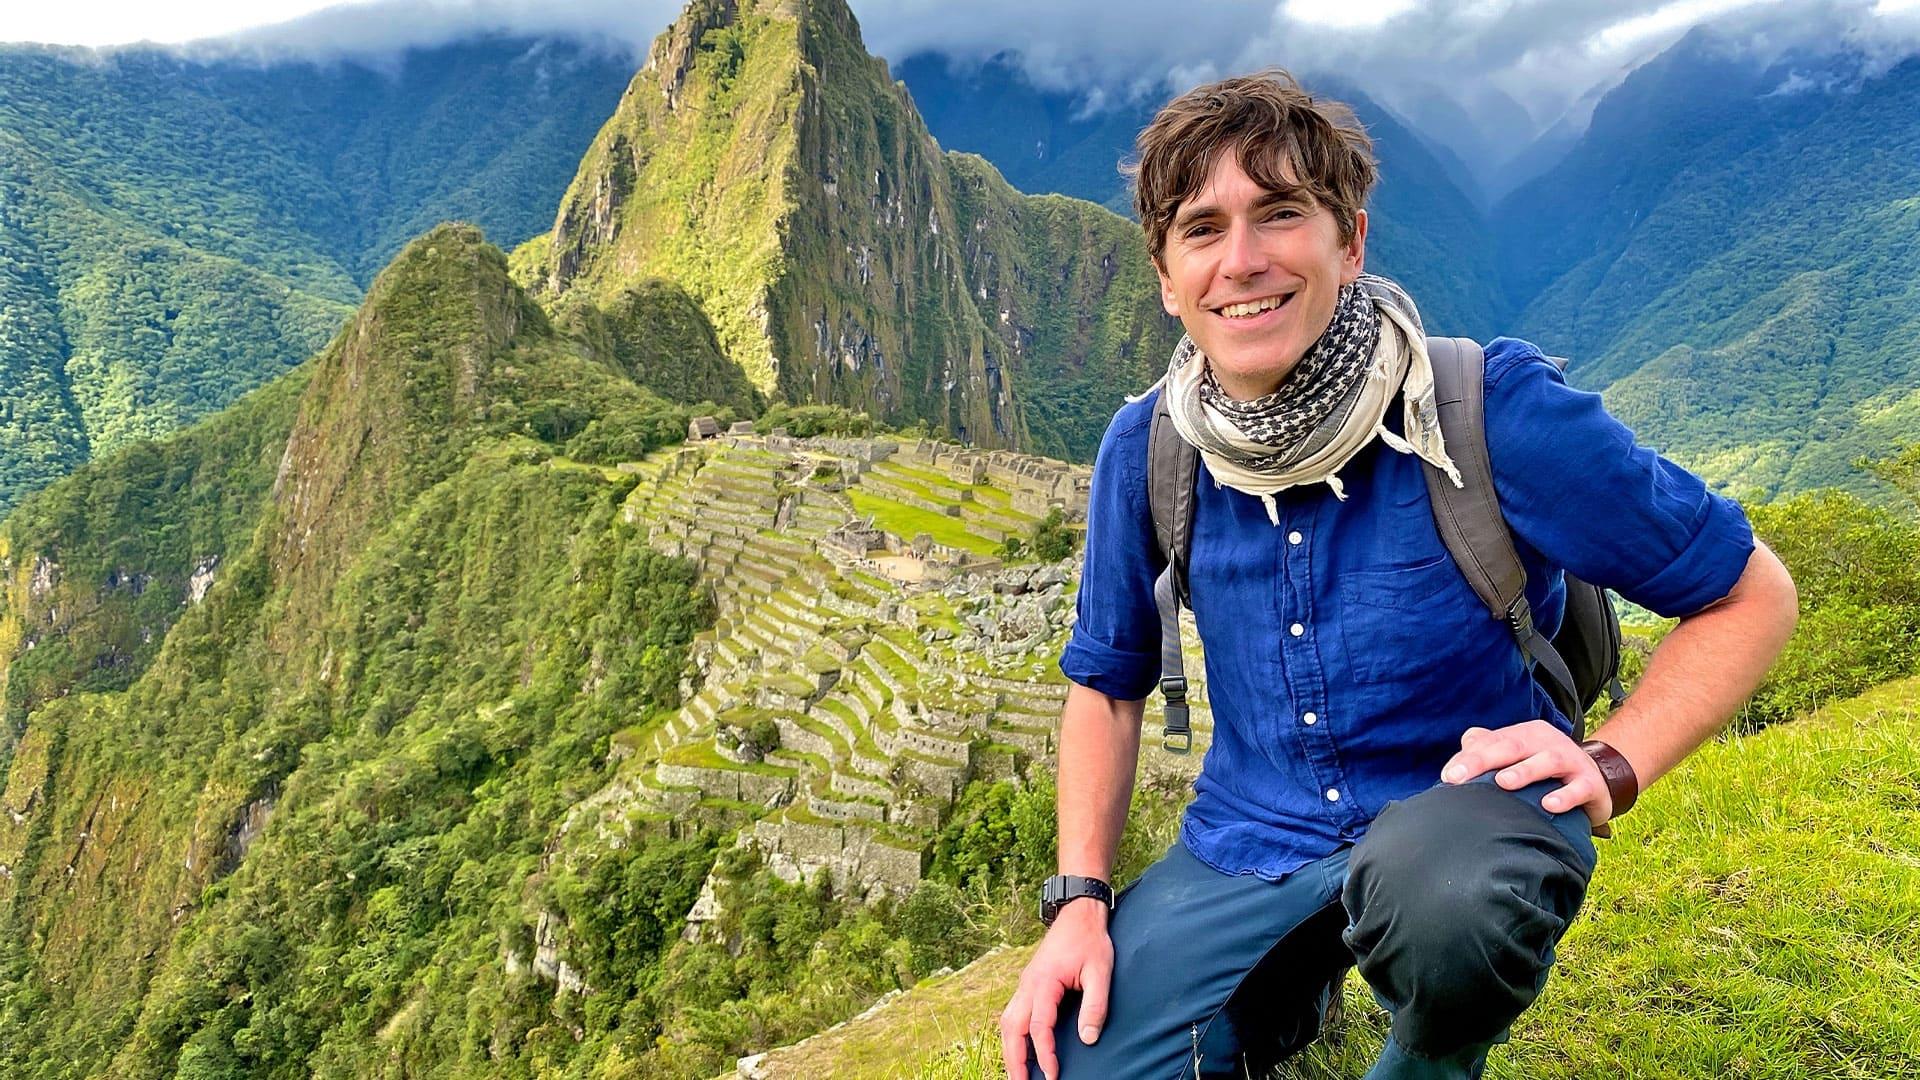 Simon Reeve's South America backdrop